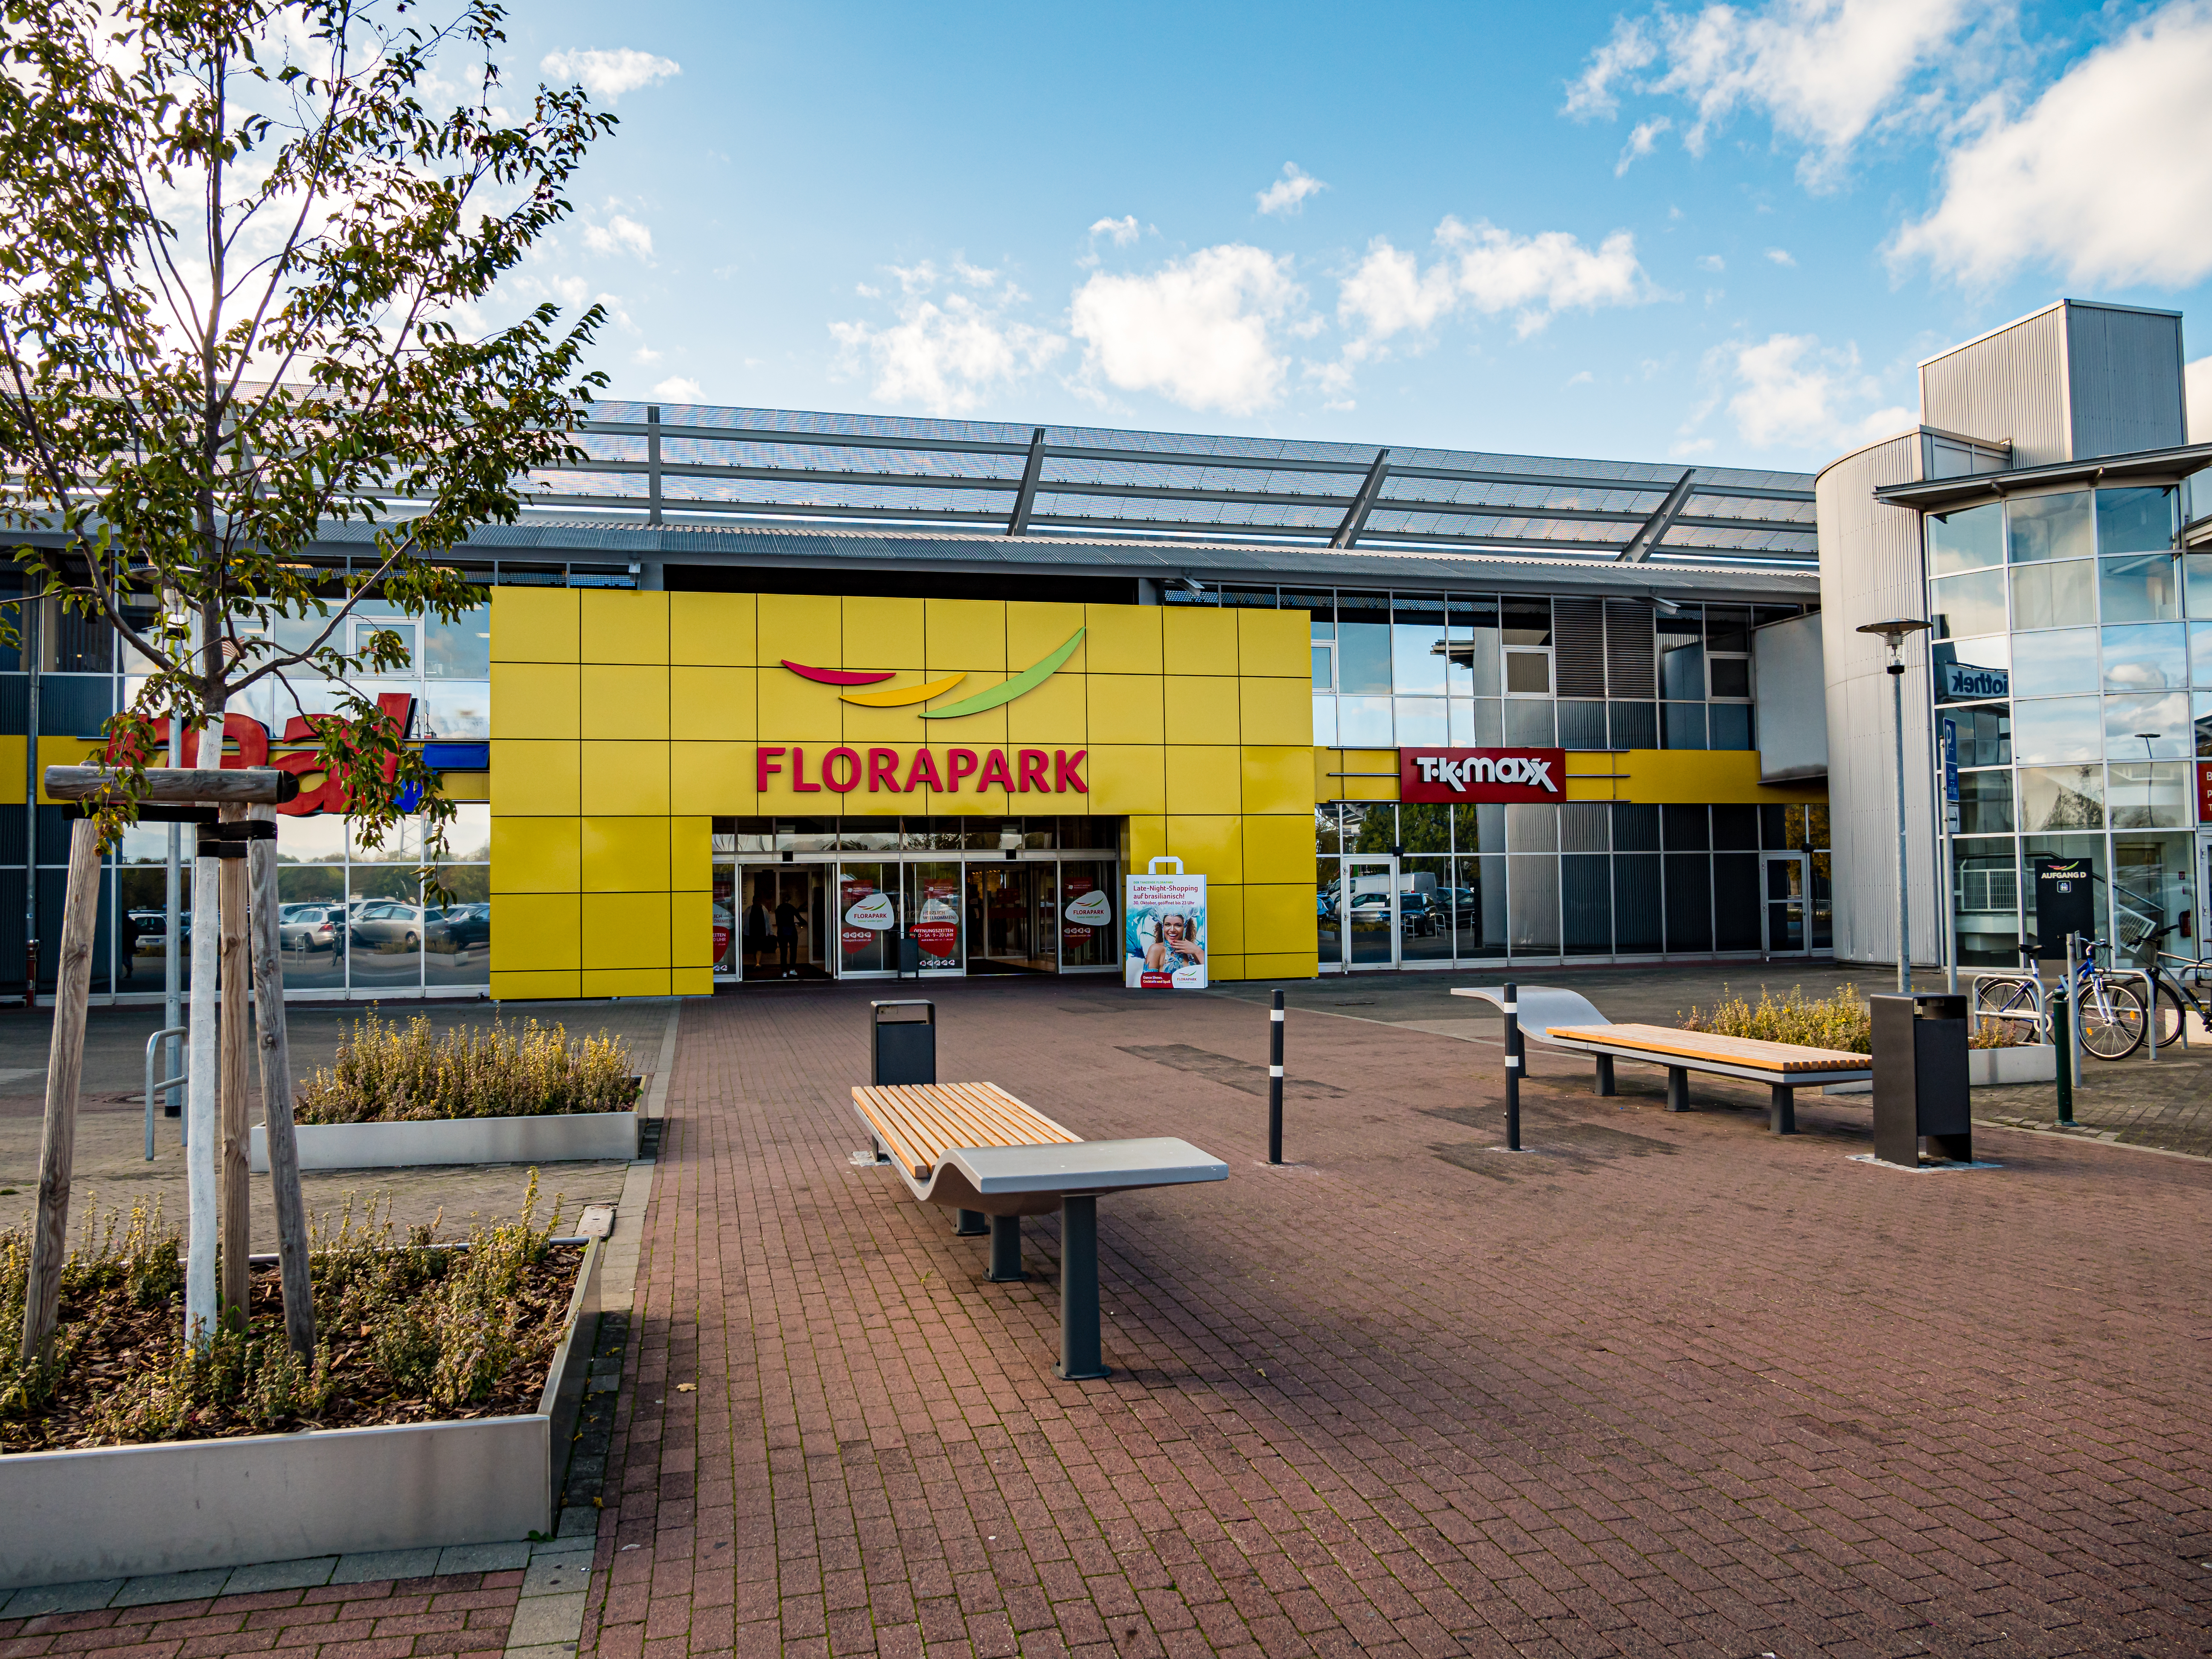 Rossmann – Foto de Einkaufszentrum FLORAPARK, Magdeburg - Tripadvisor